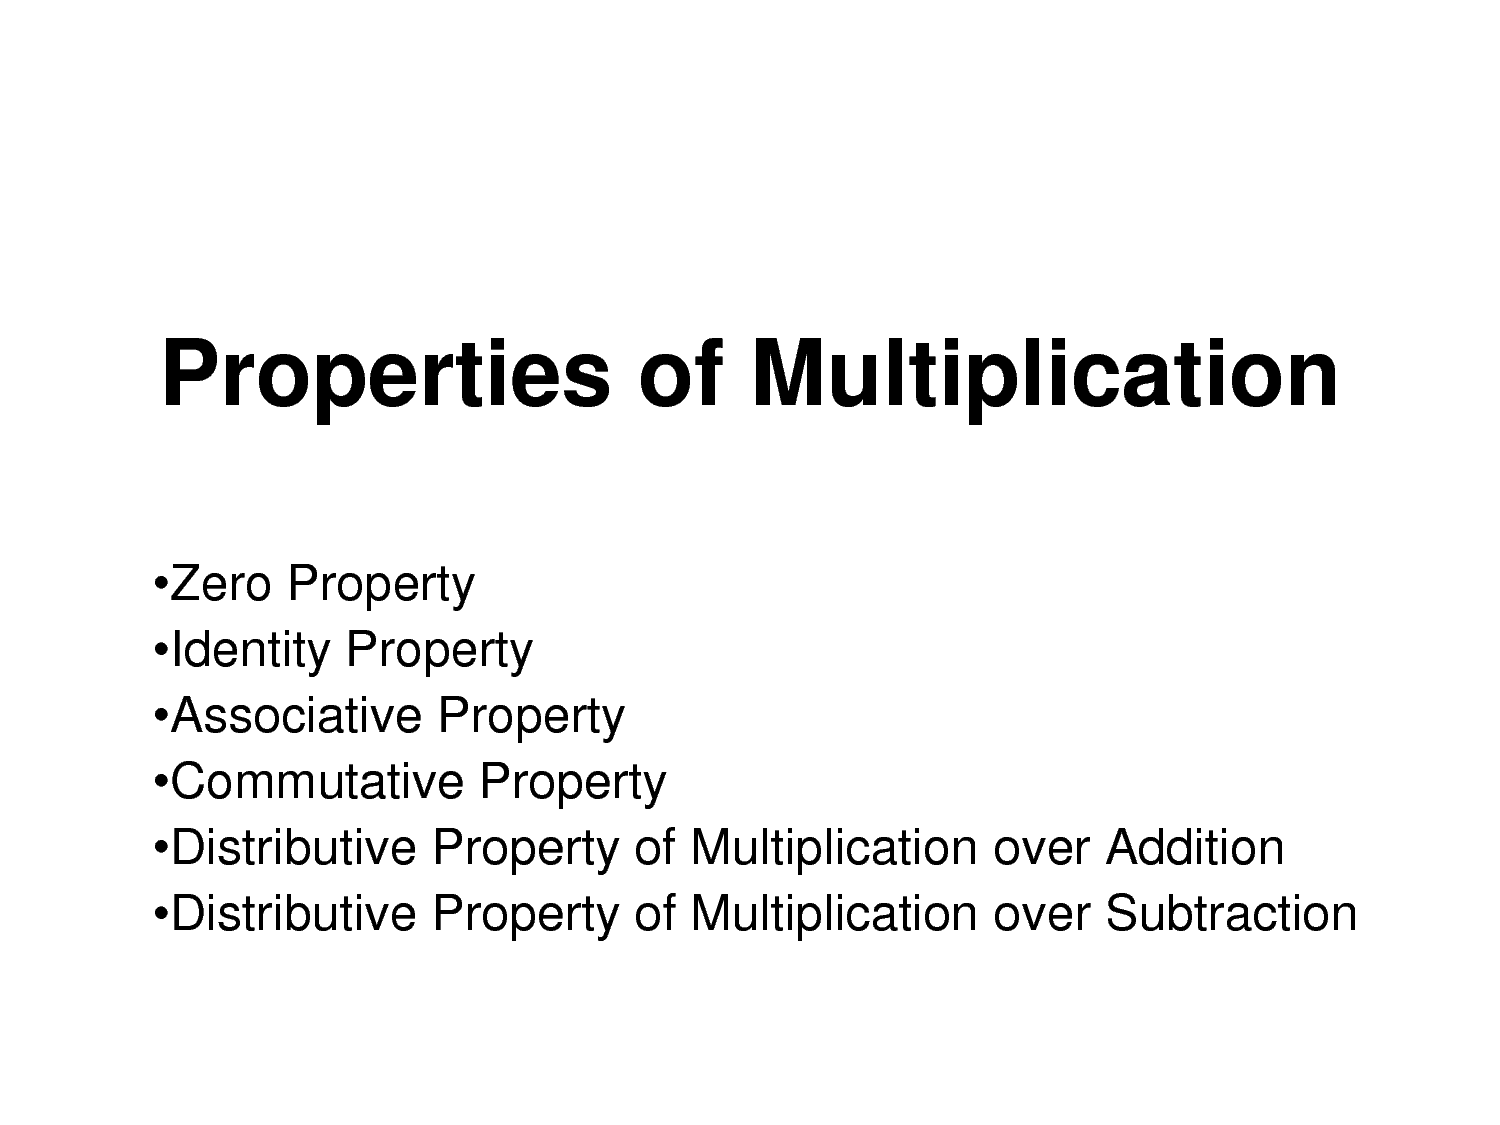 Associative Property of Multiplication Definition Image